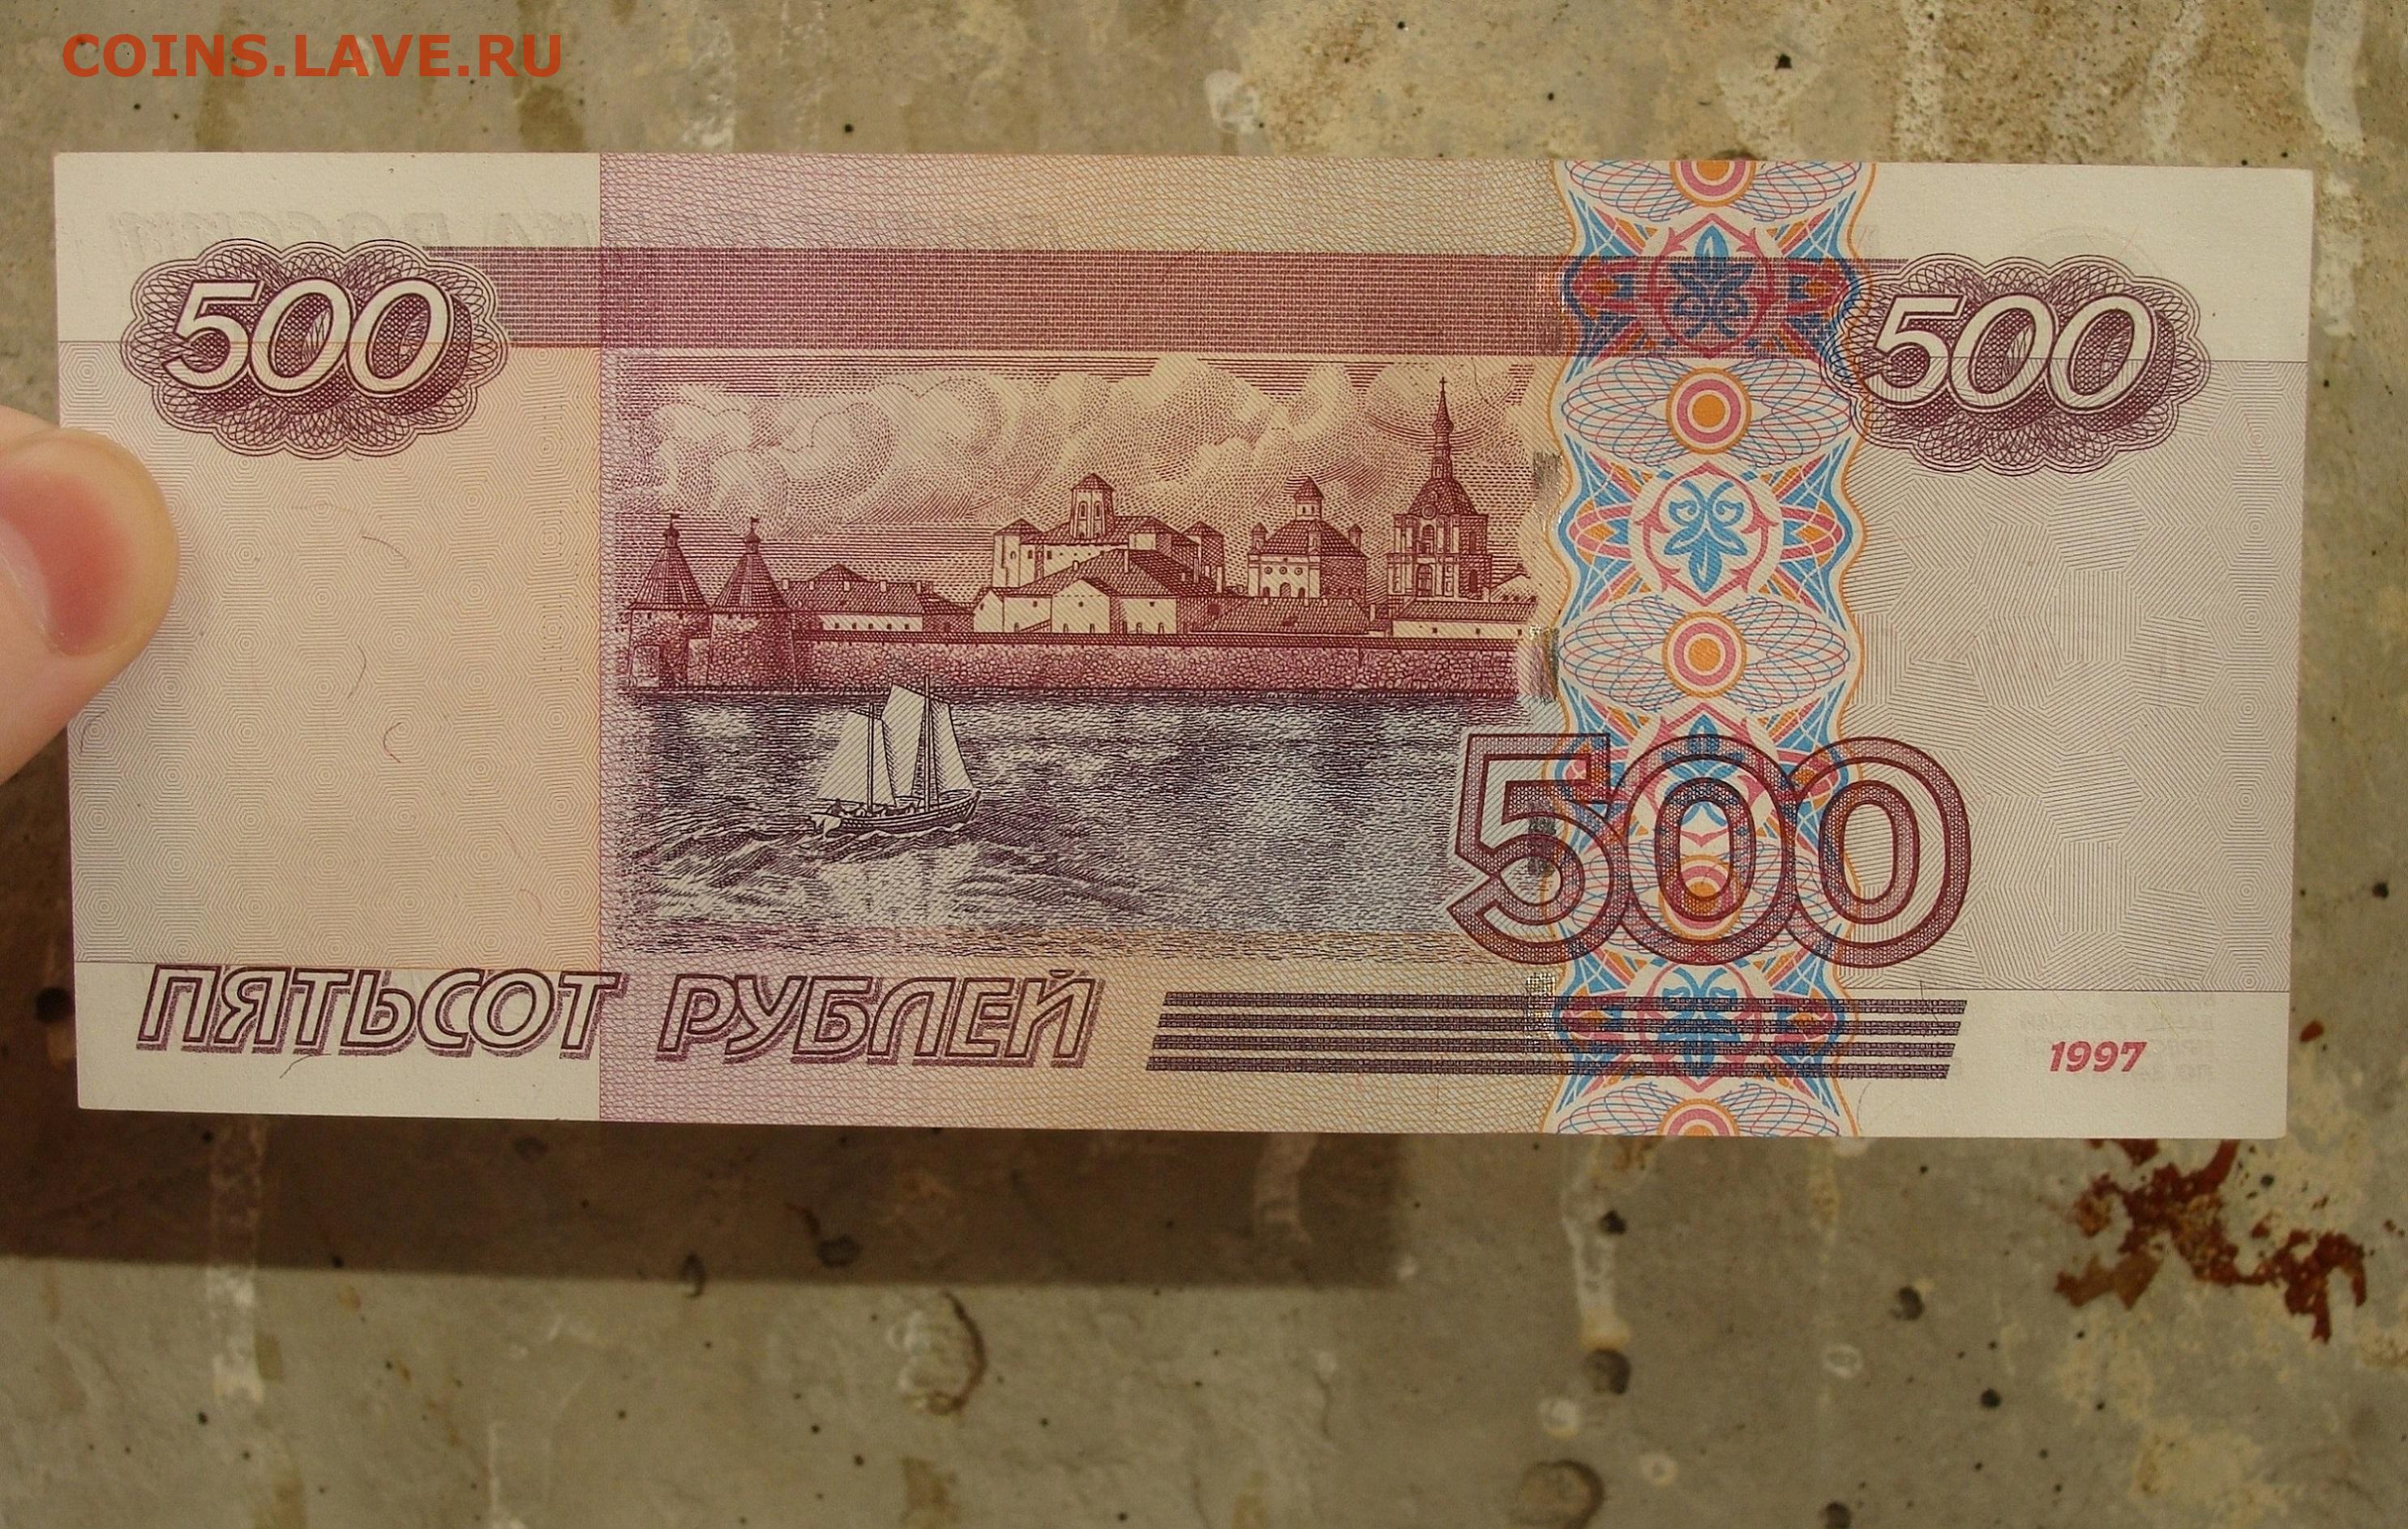 Н 500 рублей. 500 Рублей 1997 (модификация 2004 года). 500 Рублей 2004г. 500 Рублей модификация 2004. Пятьсот рублей 1997.